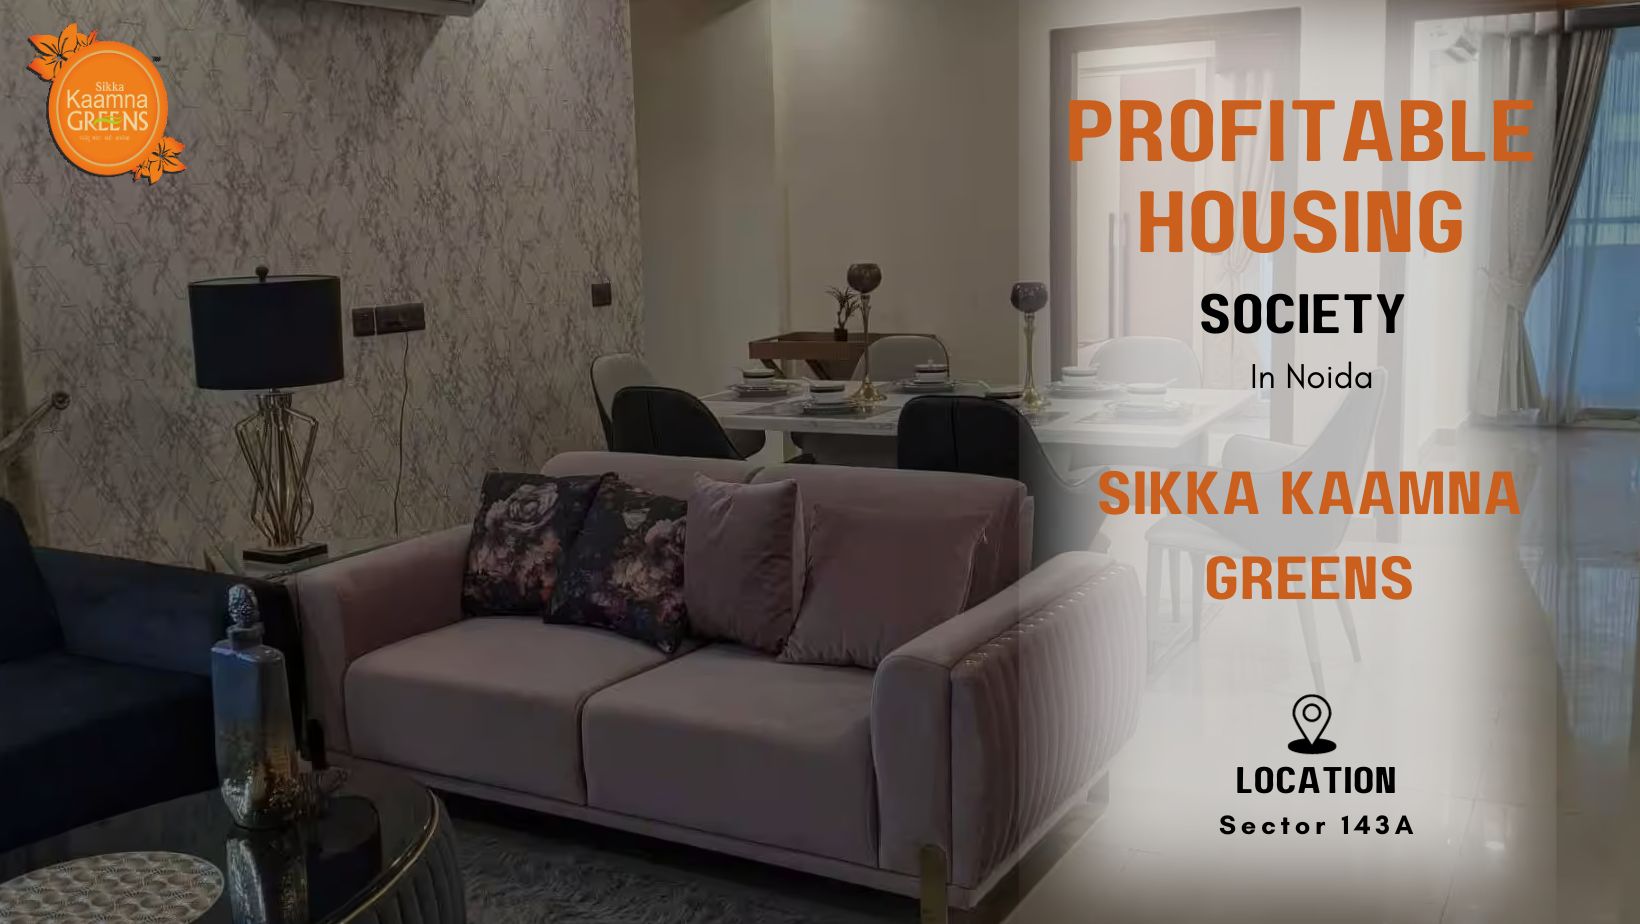 Sikka Kaamna Greens: A Profitable Housing Society in Noida - sikkakaamnagreens